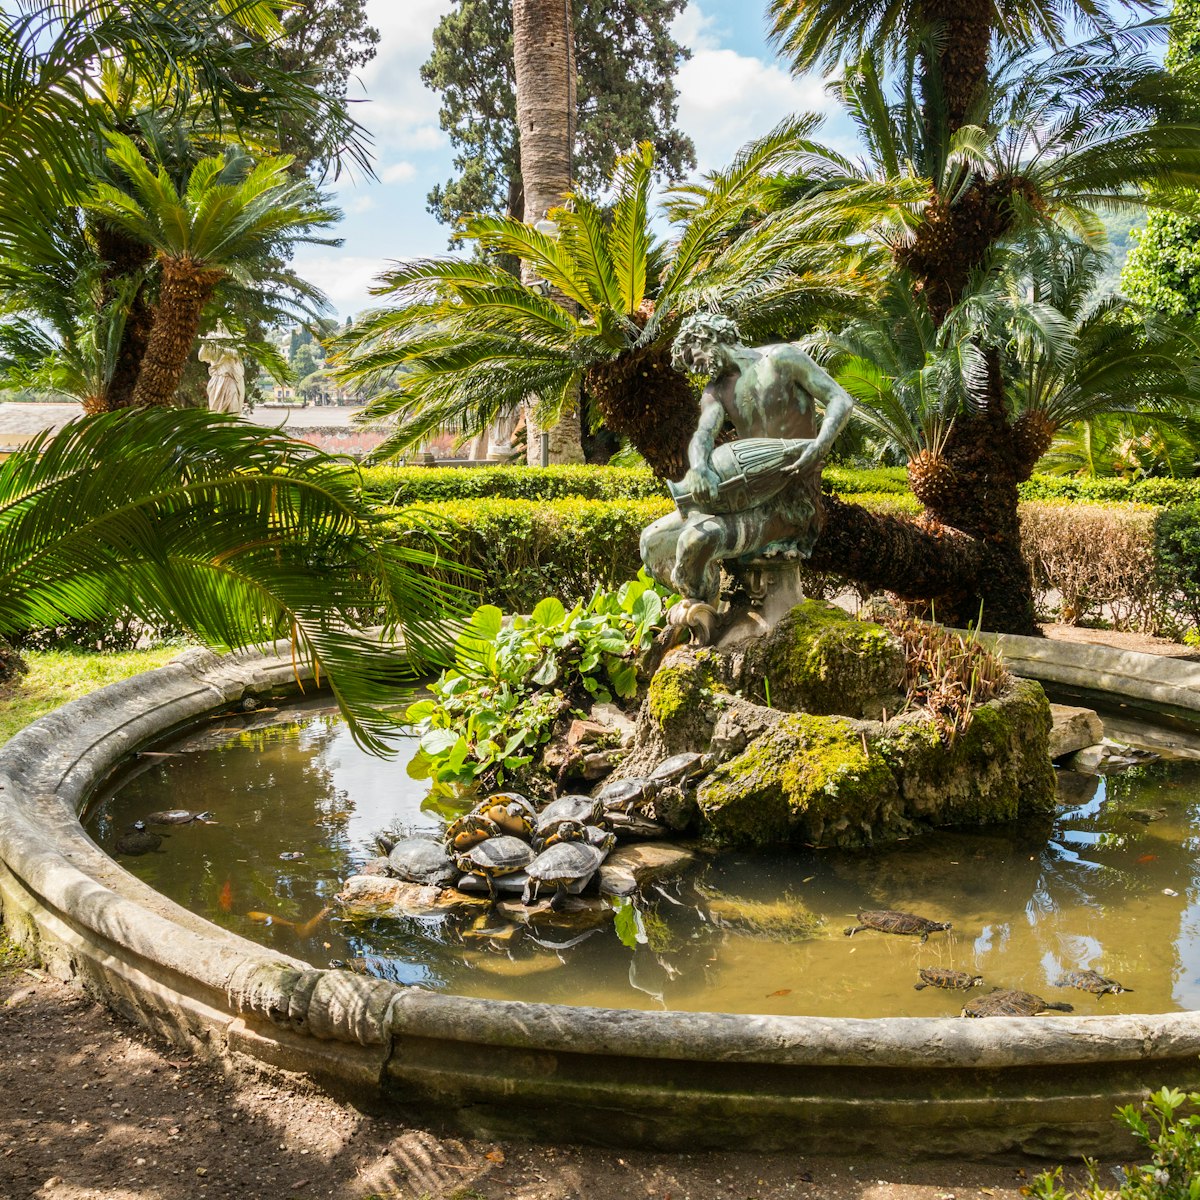 Park and garden of Villa Durazzo in Santa Margherita Ligure.